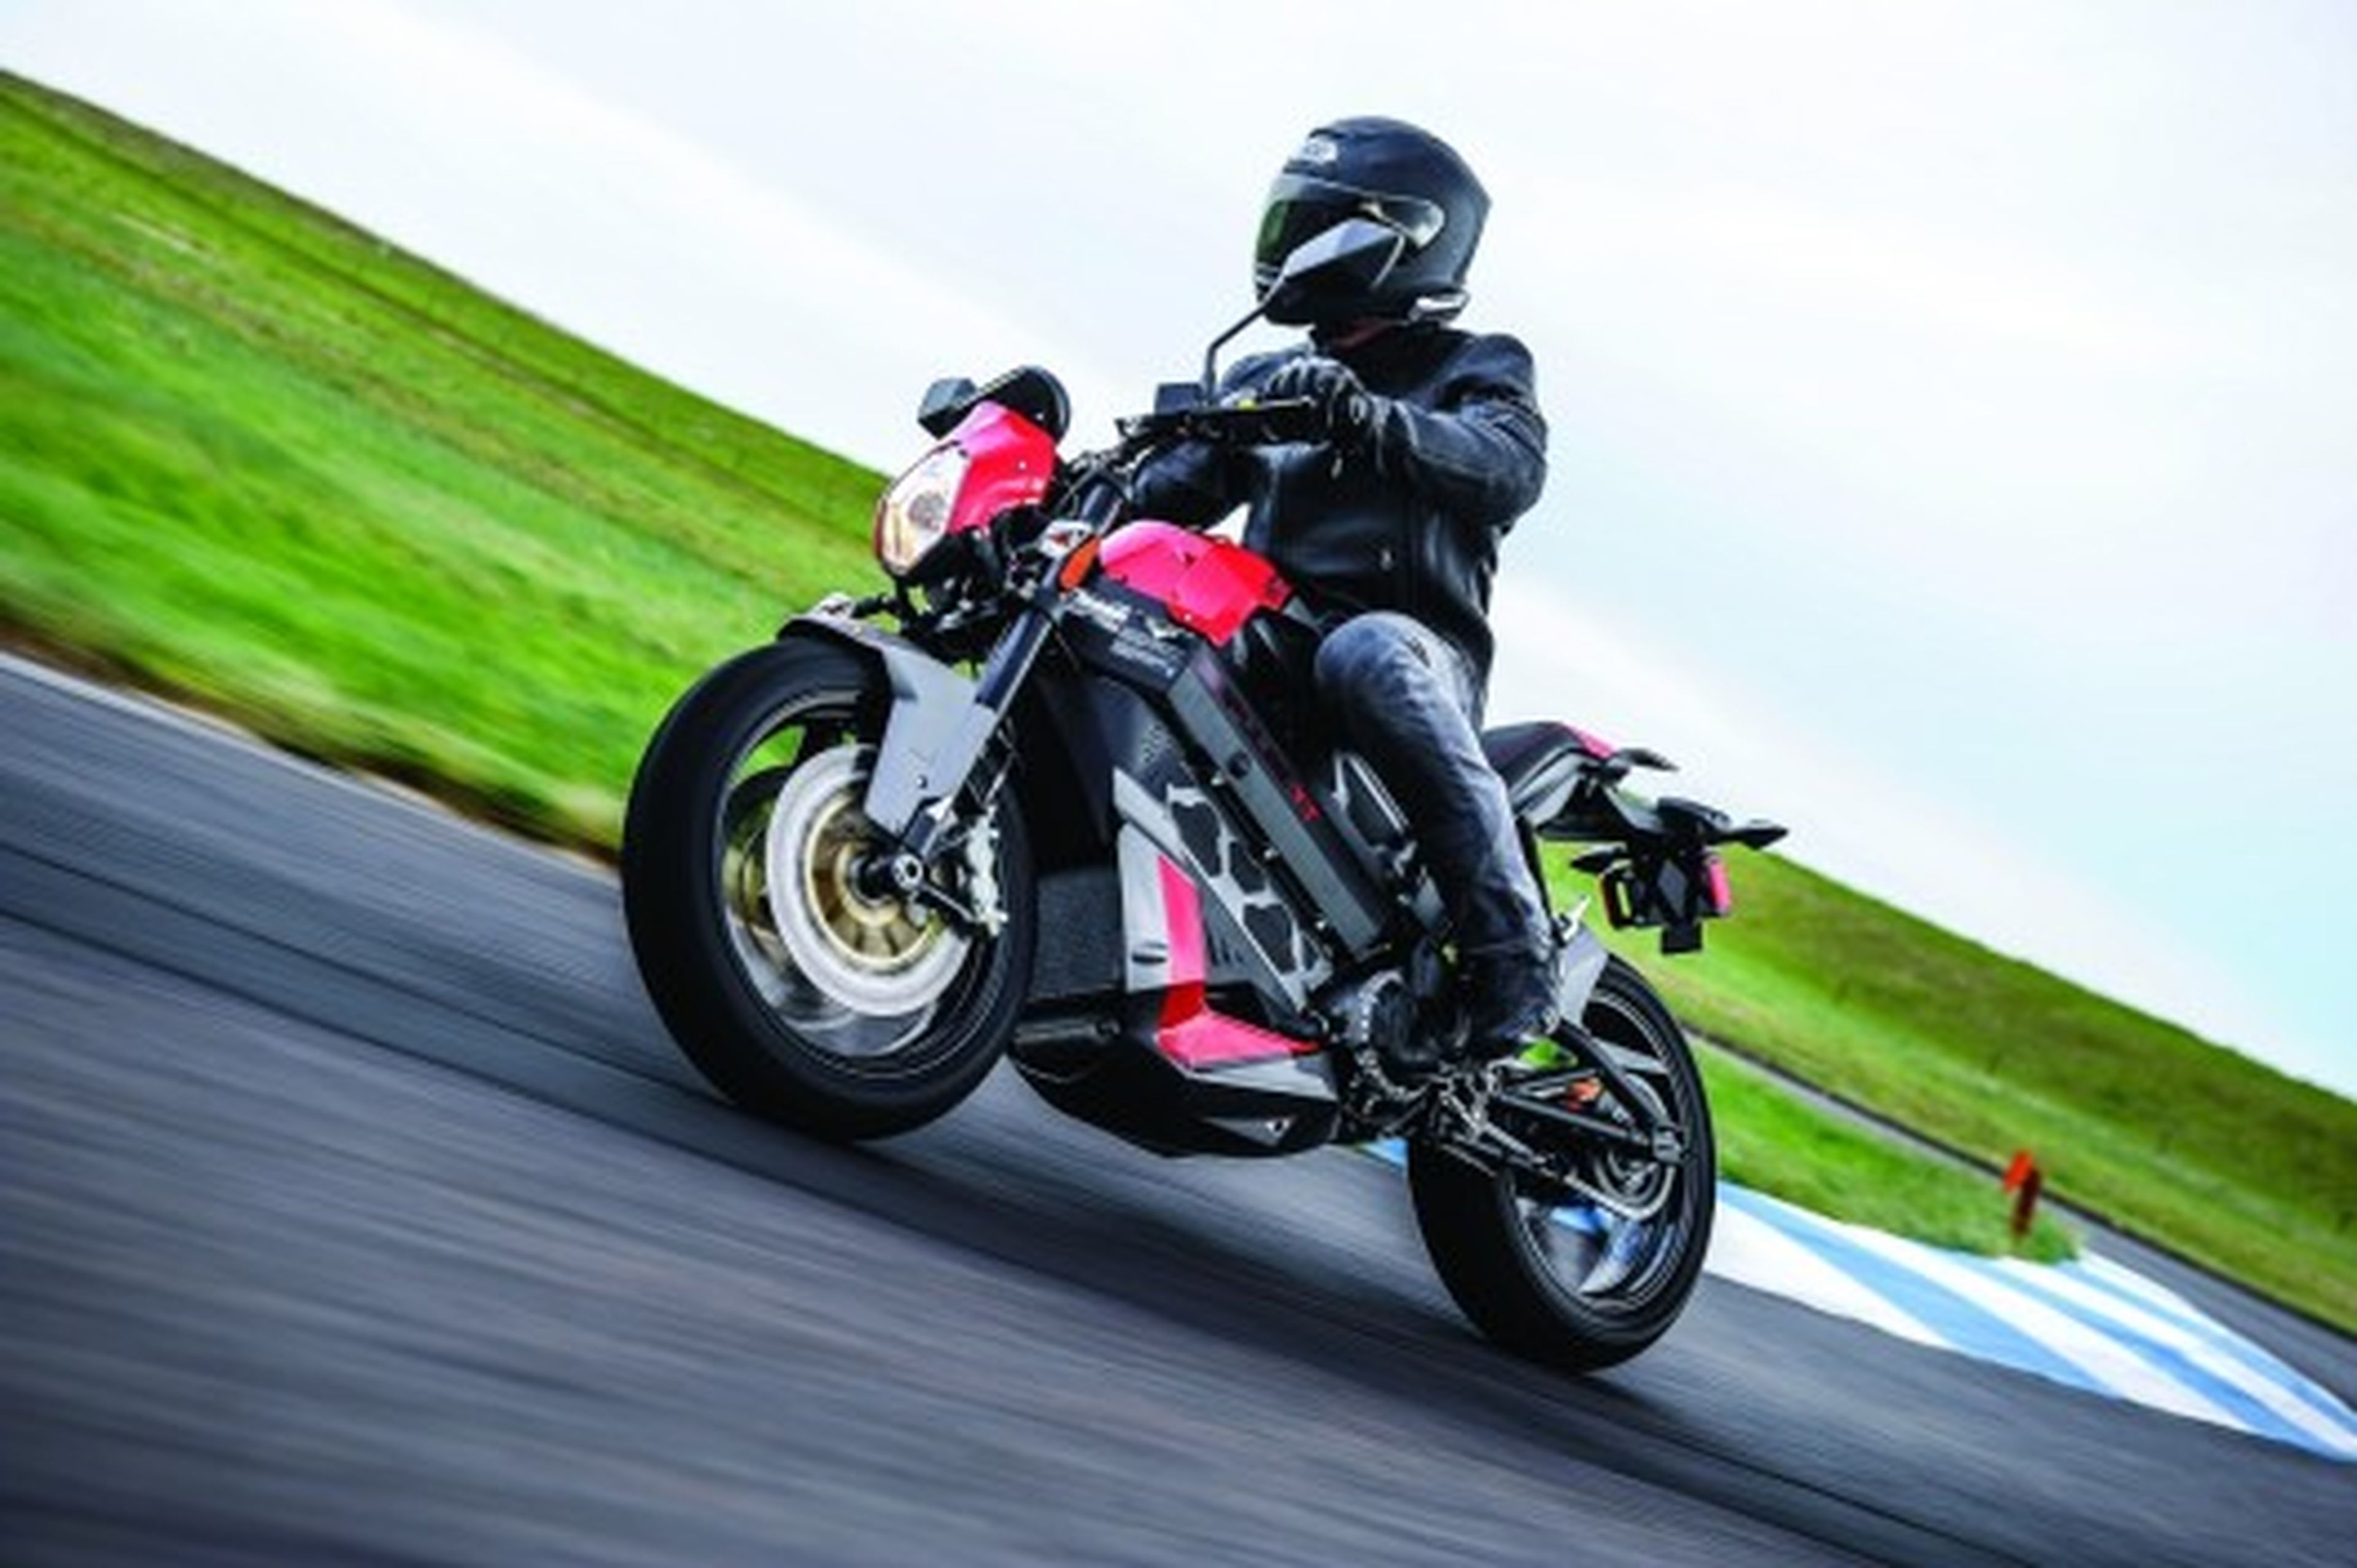 Victory Empulse TT:moto deportiva eléctrica a la americana